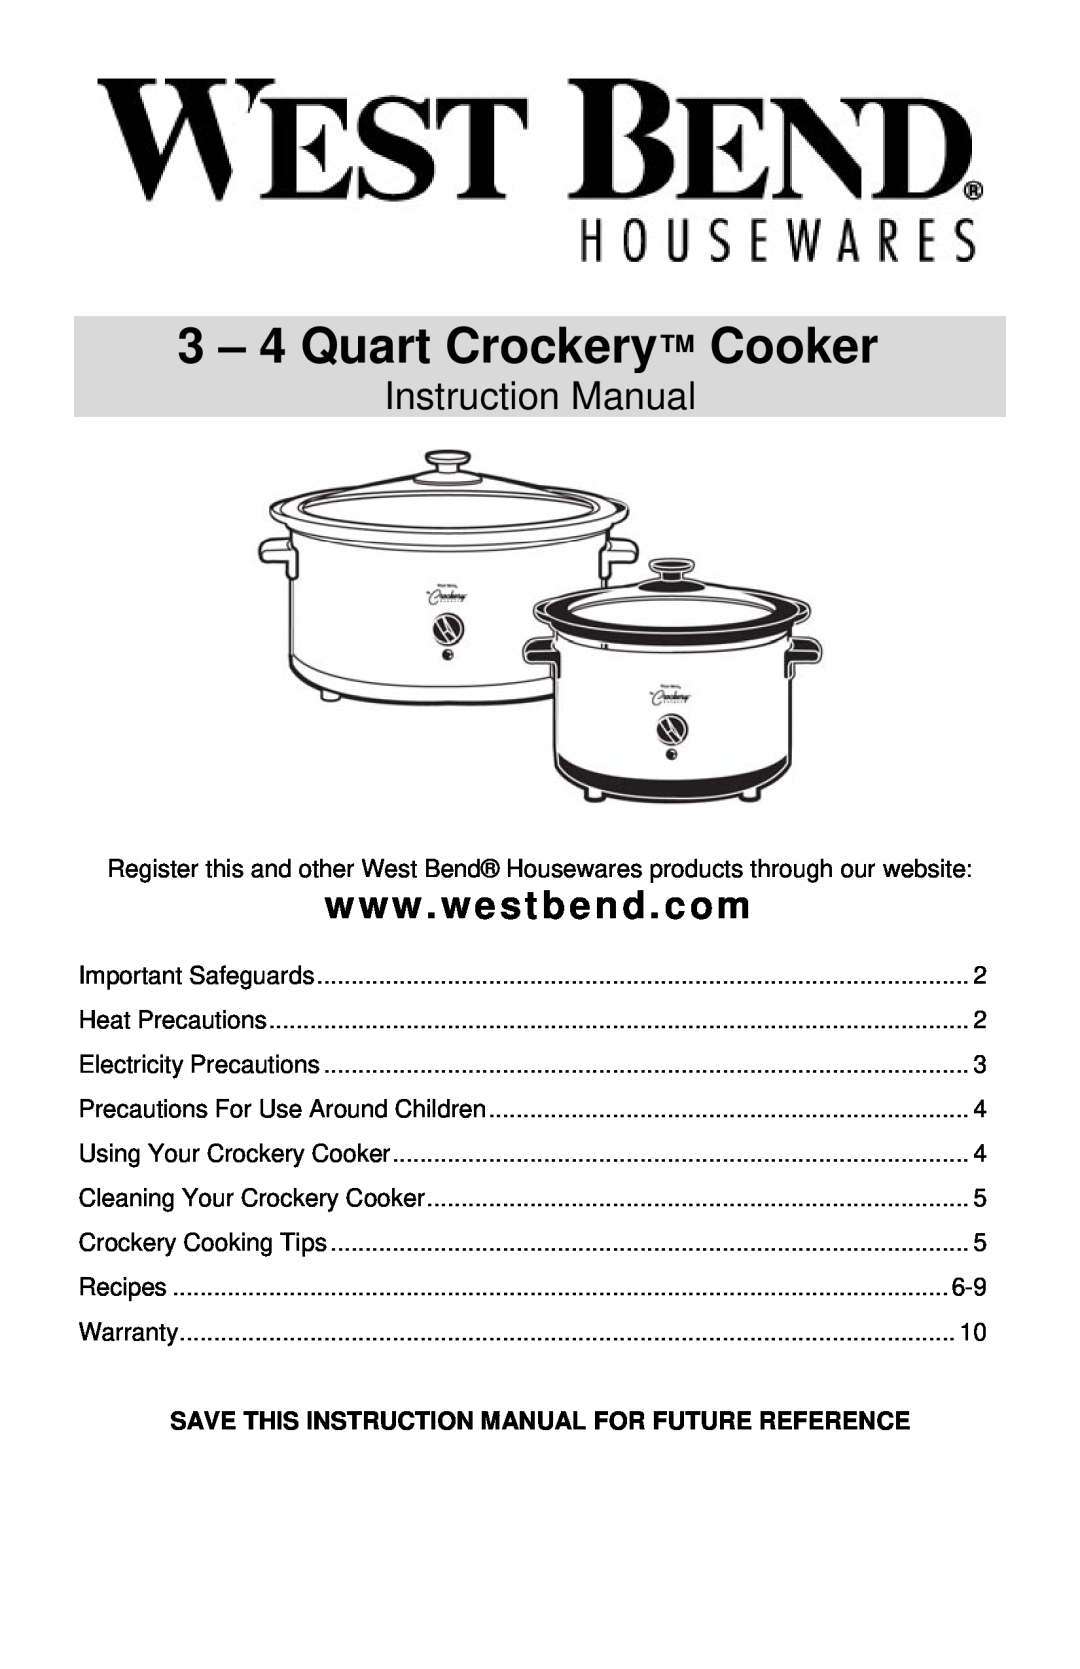 West Bend instruction manual 3 – 4 Quart Crockery Cooker, Instruction Manual 